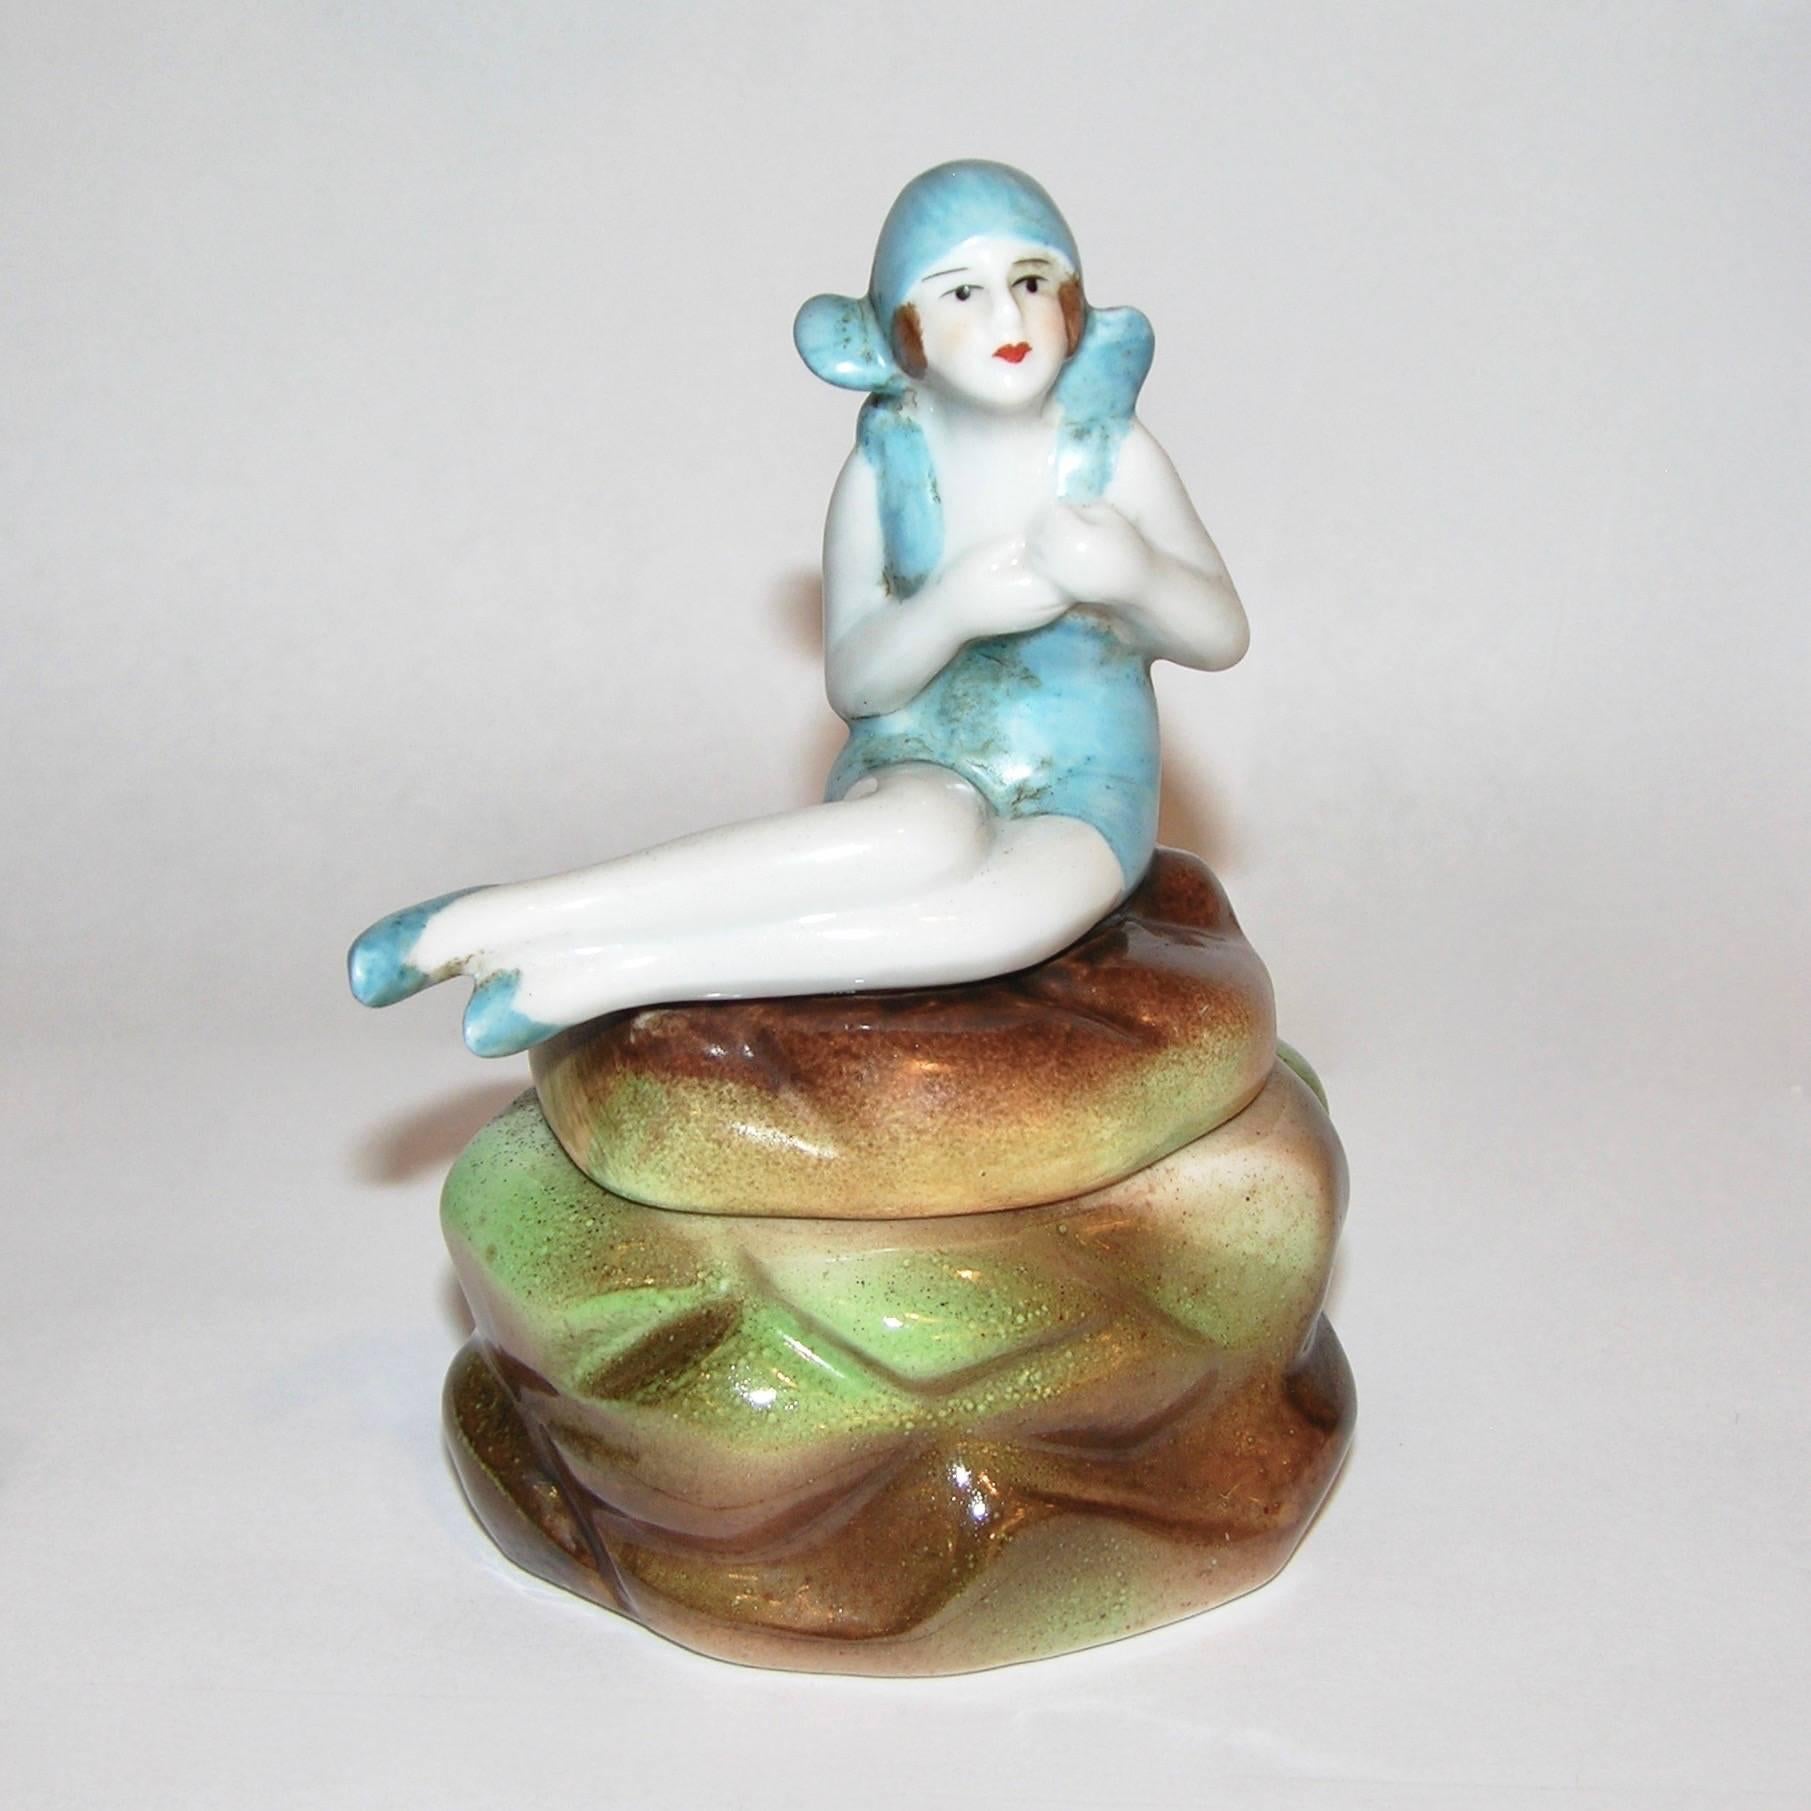 bathing beauty figurine in antique ceramic porcelain figurines